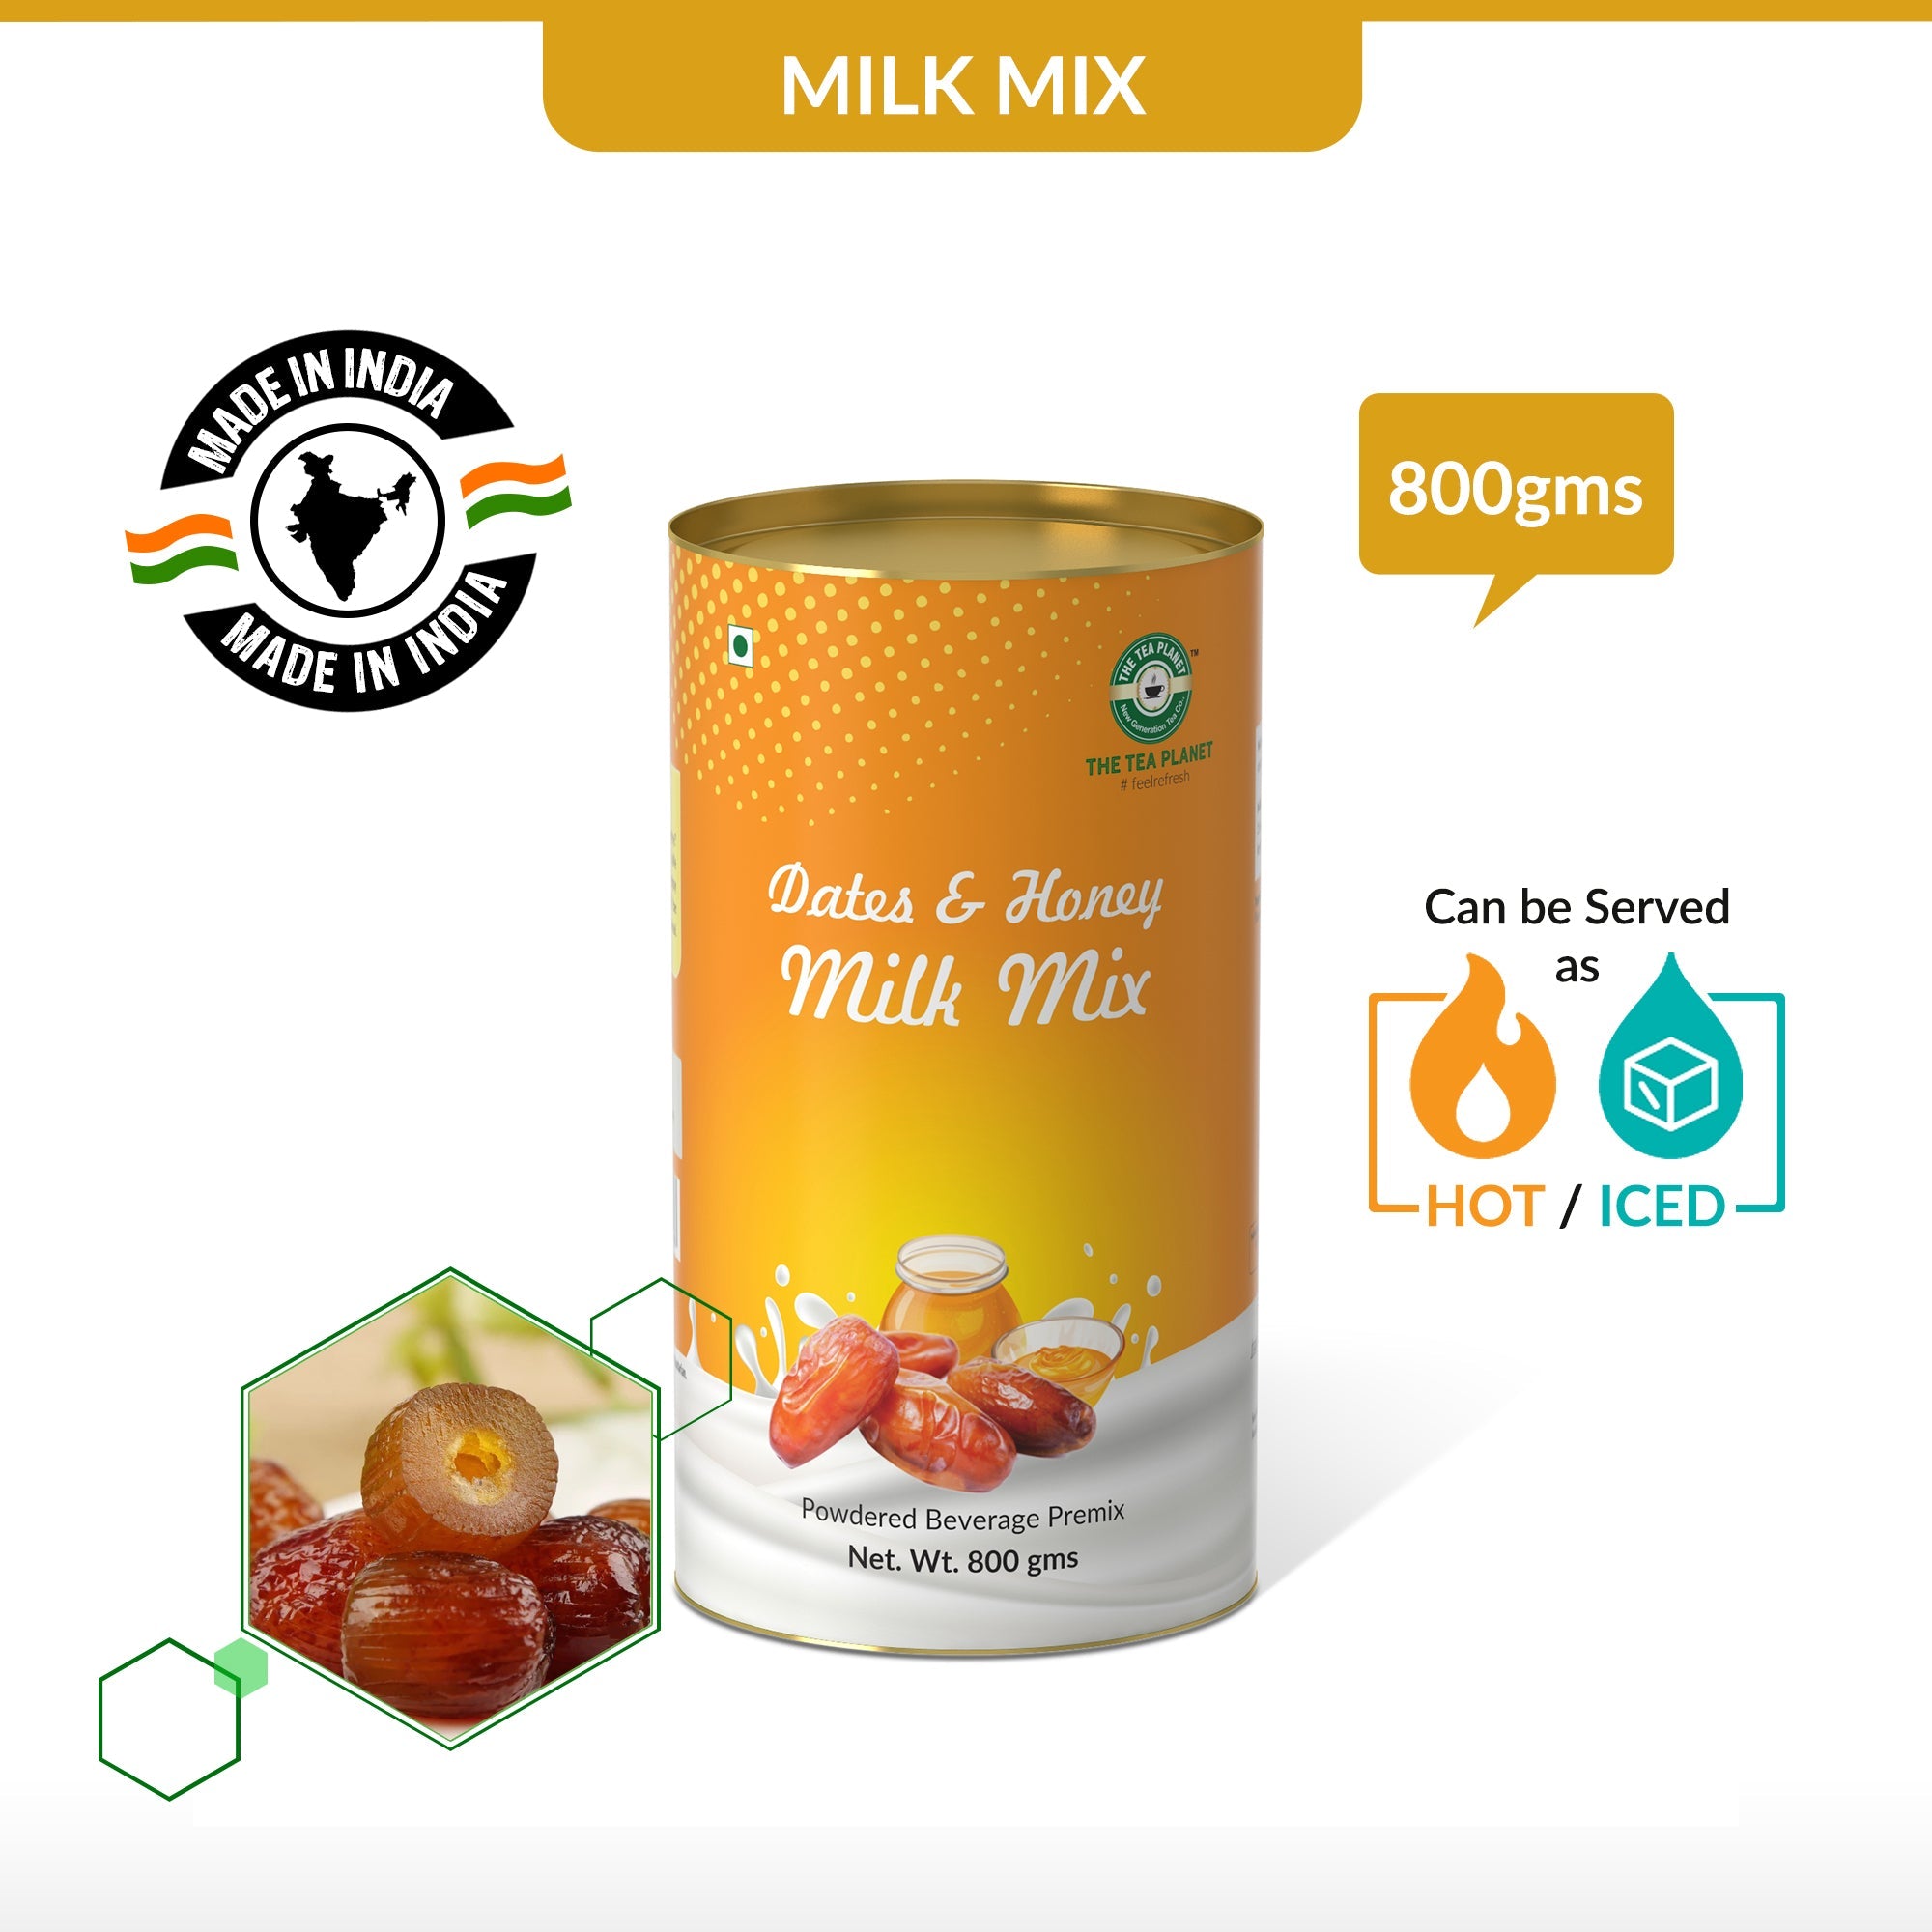 Dates & Honey Milk Mix - 250 gms